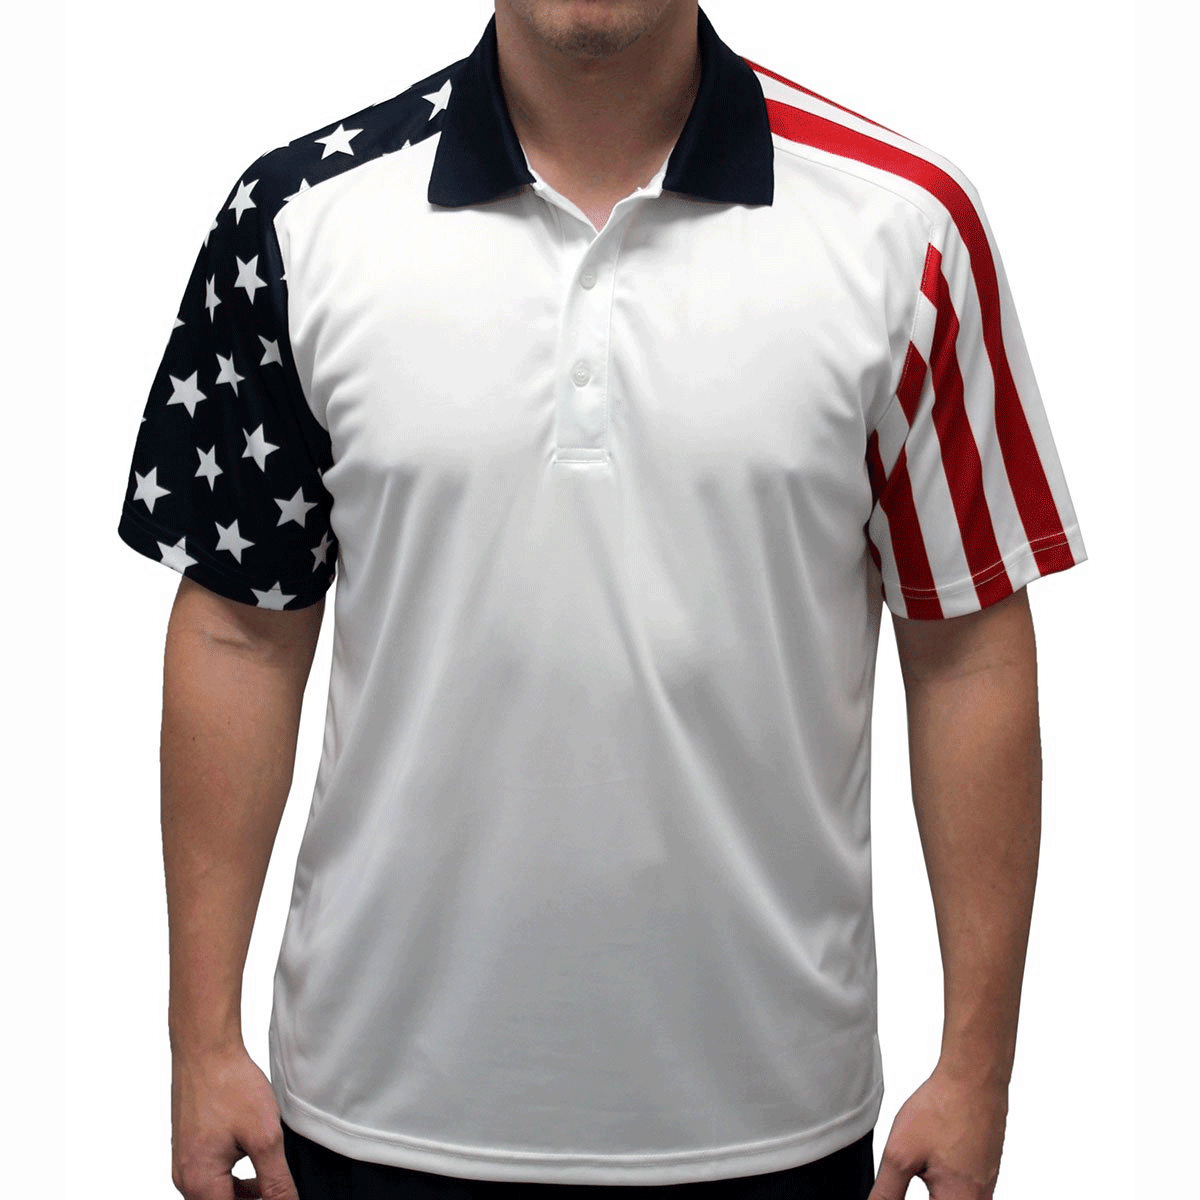 Men's Stars & Stripes Polo Golf Shirt in Red White and Blue Flag Design ...